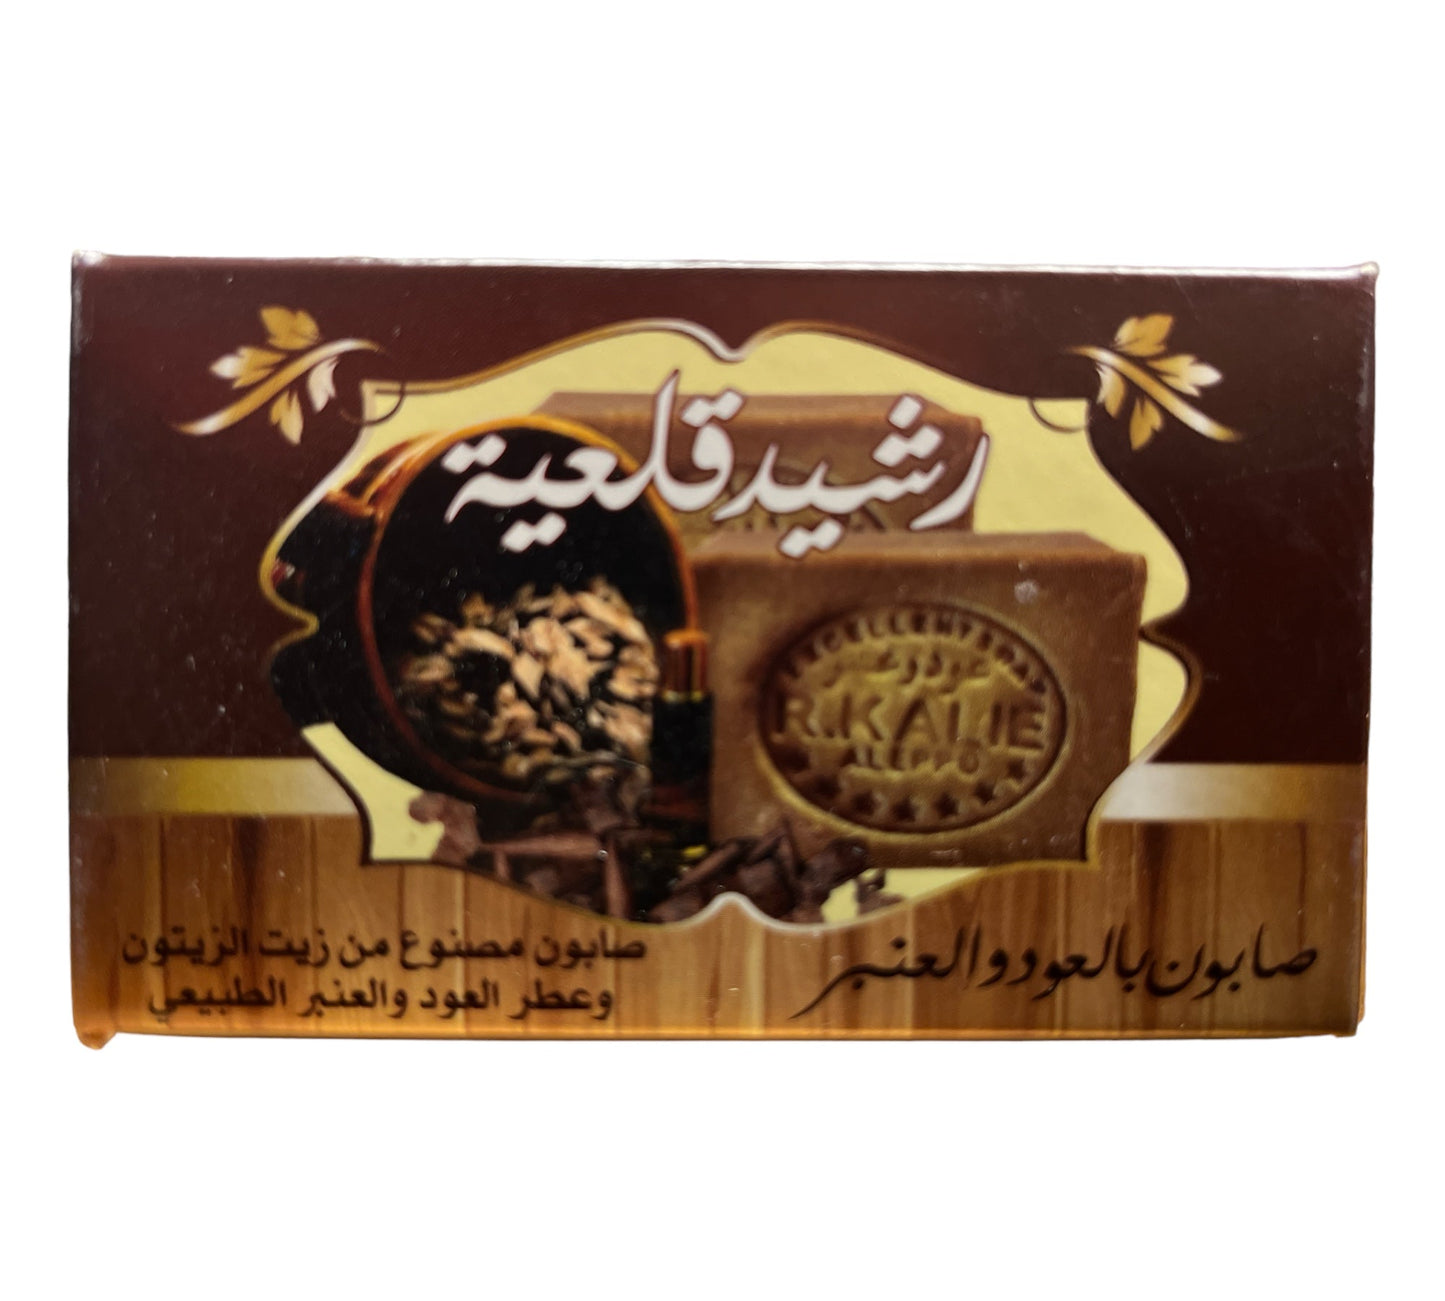 R. KALIE Aoud & Anbar Natural Soap  with Anbar Parfum 200g